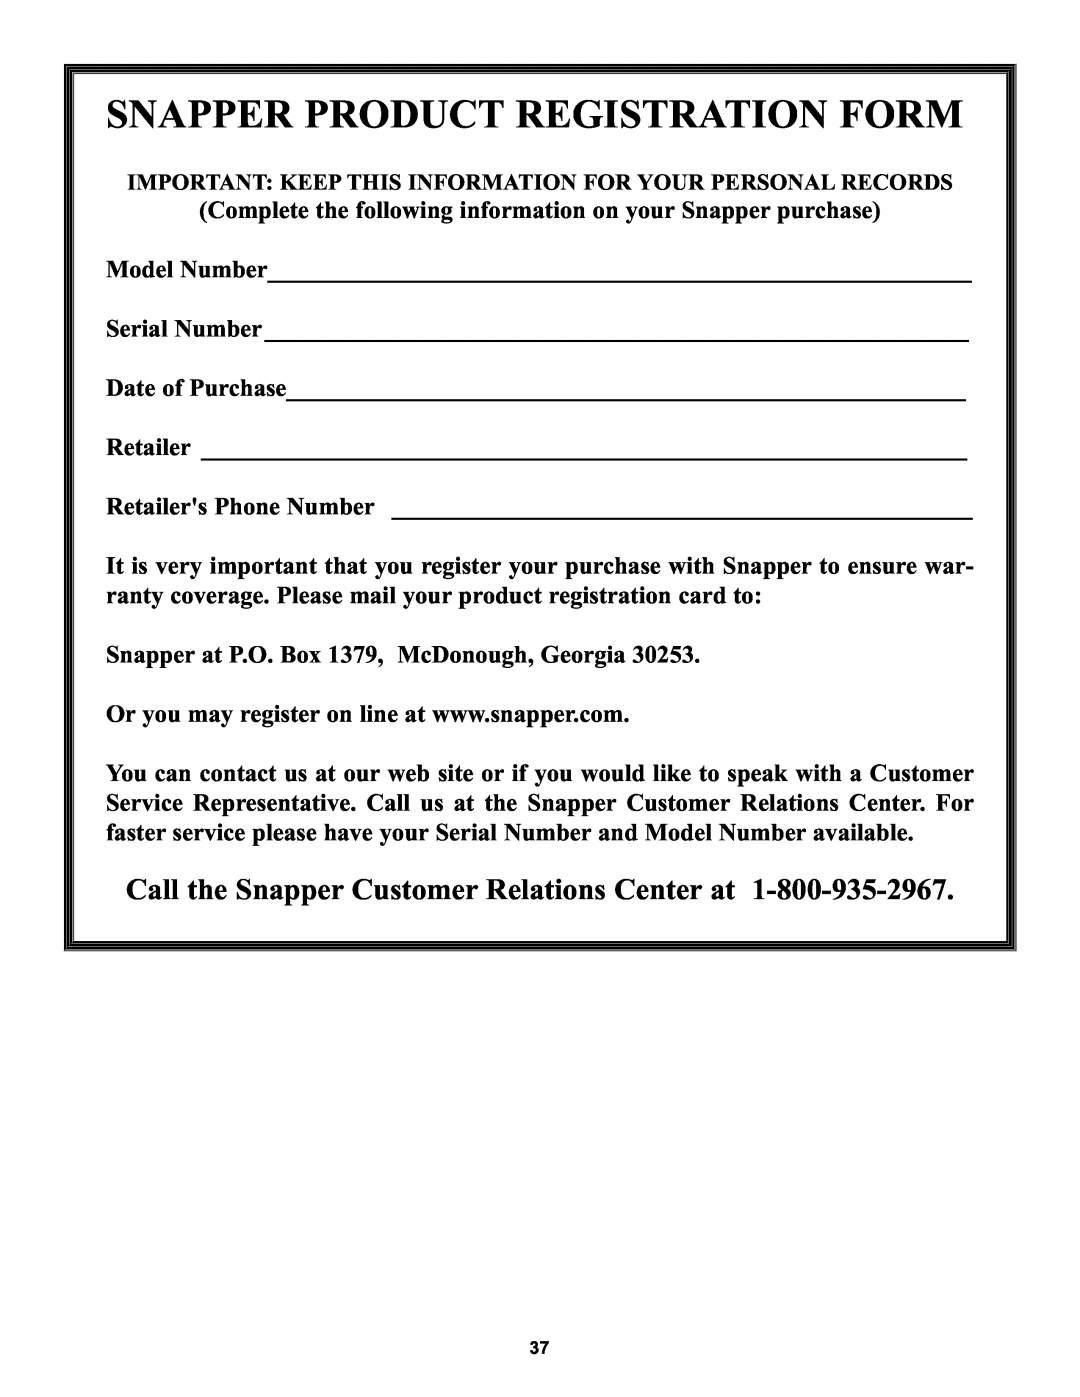 Snapper NZMX30614KH, NZMX32734BV Snapper Product Registration Form, Call the Snapper Customer Relations Center at 